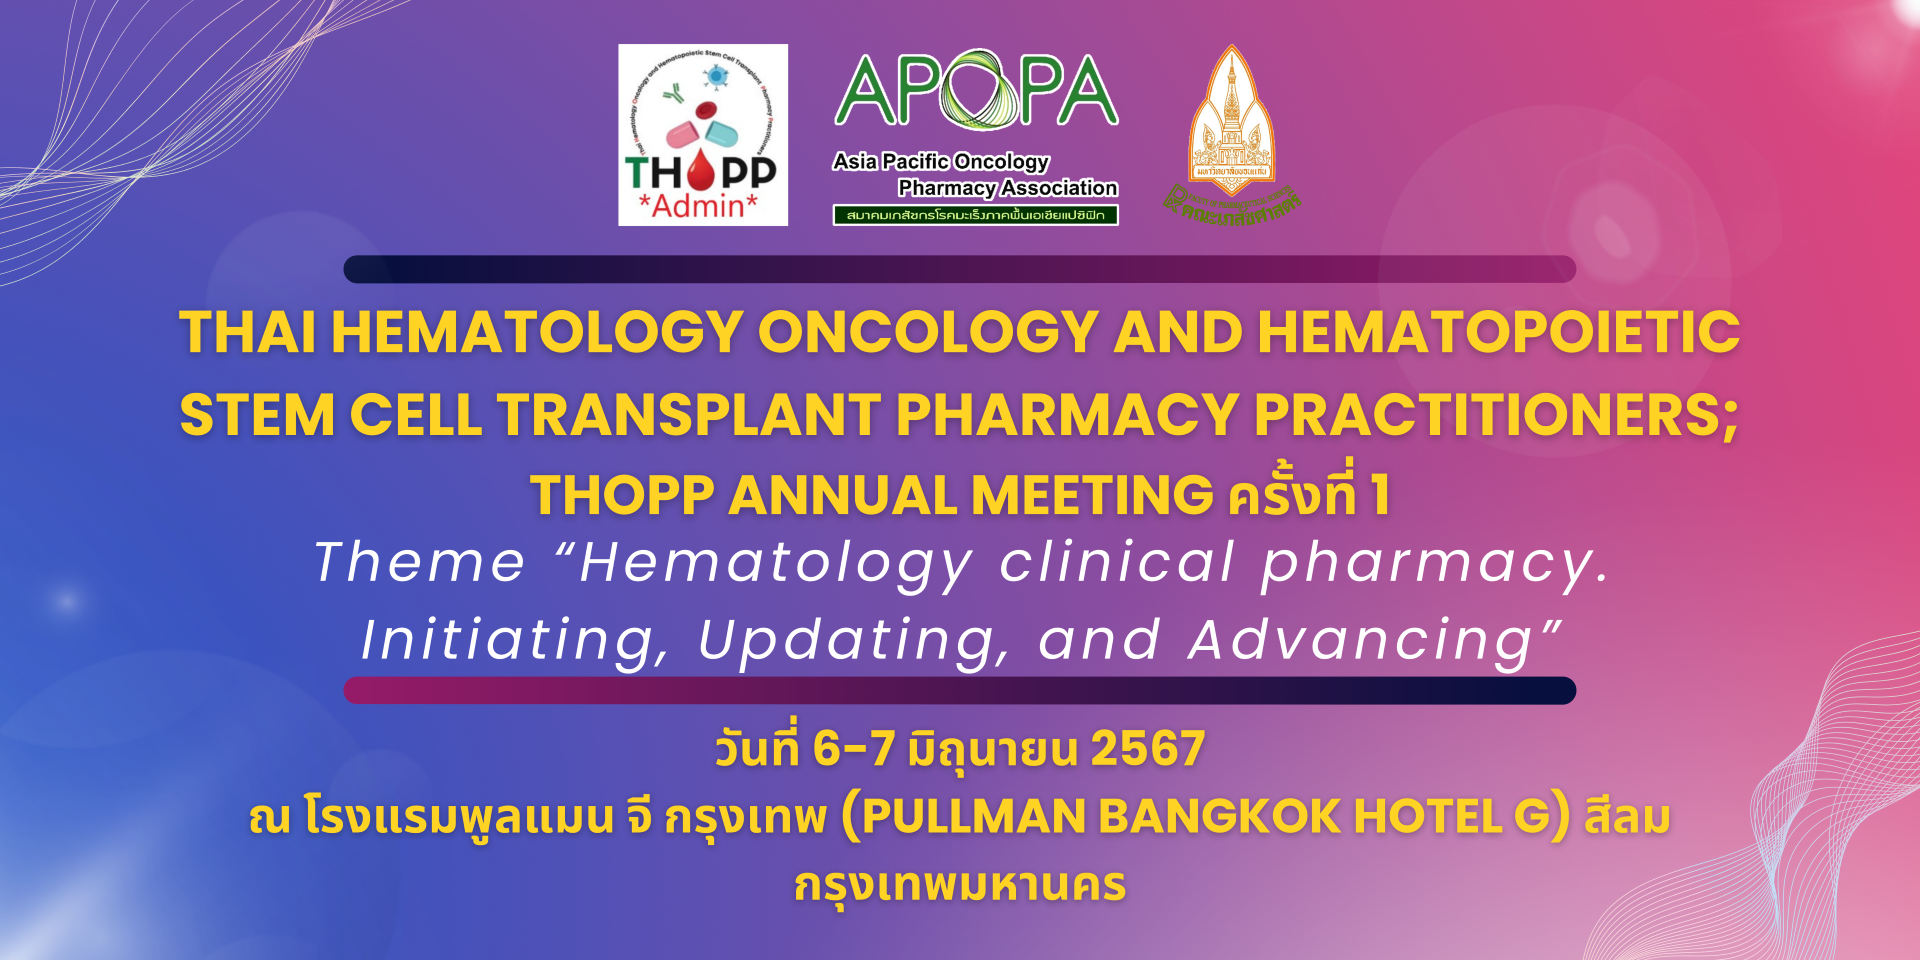 THOPP-67 THOPP 1st annual meeting โครงการประชุมวิชาการ กลุ่มเภสัชกรดูแลผู้ป่วยโรคมะเร็งทางโลหิตวิทยา และผู้ป่วยปลูกถ่ายไขกระดูก (ประเทศไทย)